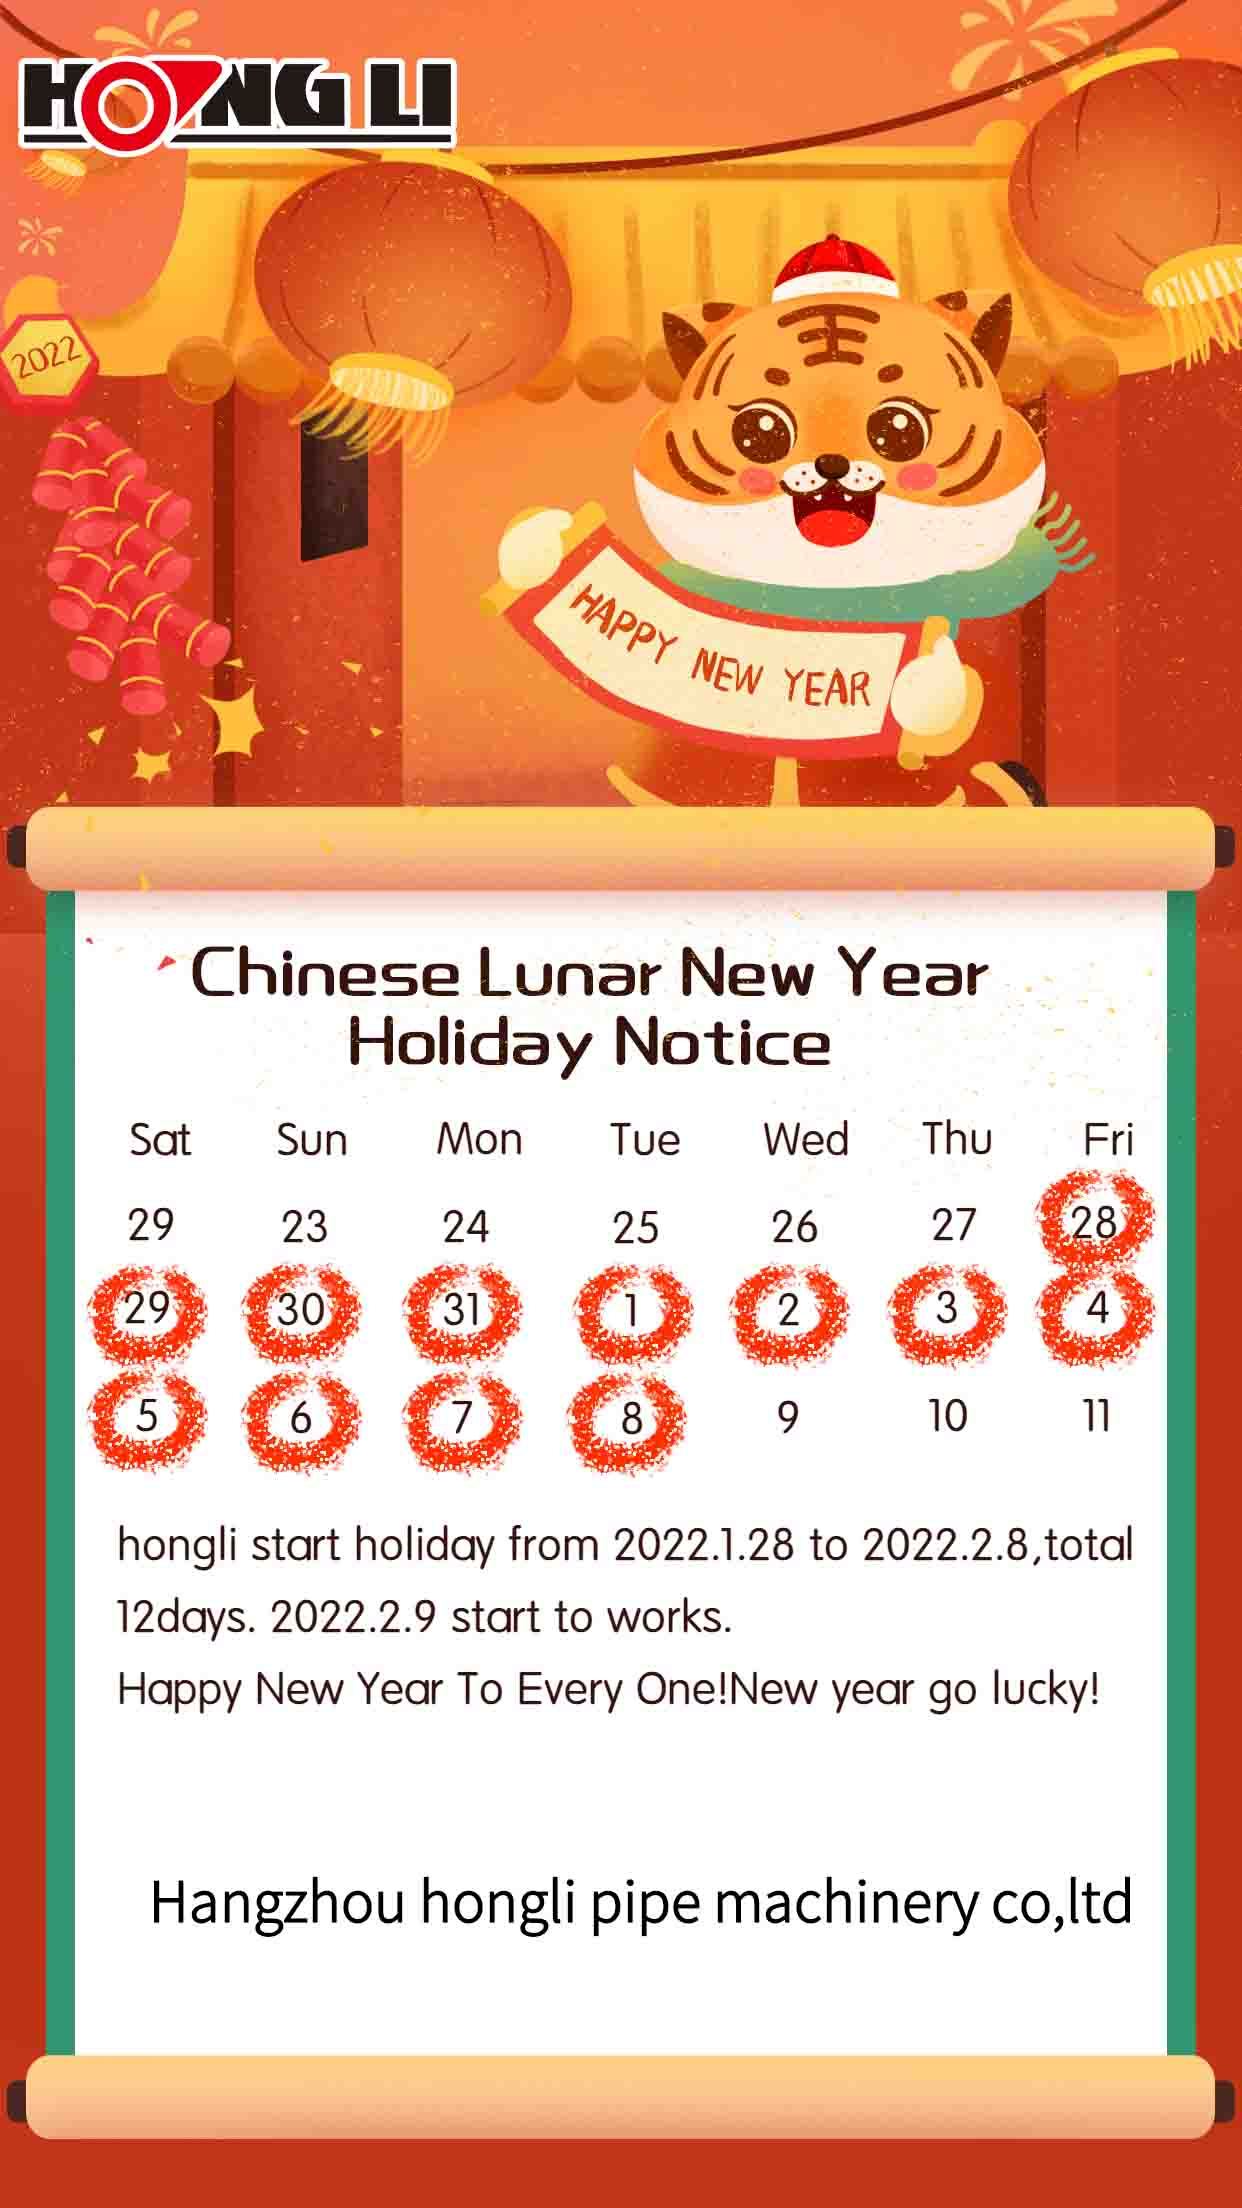 HONGLI 2022 Chinese Lunar New Year Holiday Notice